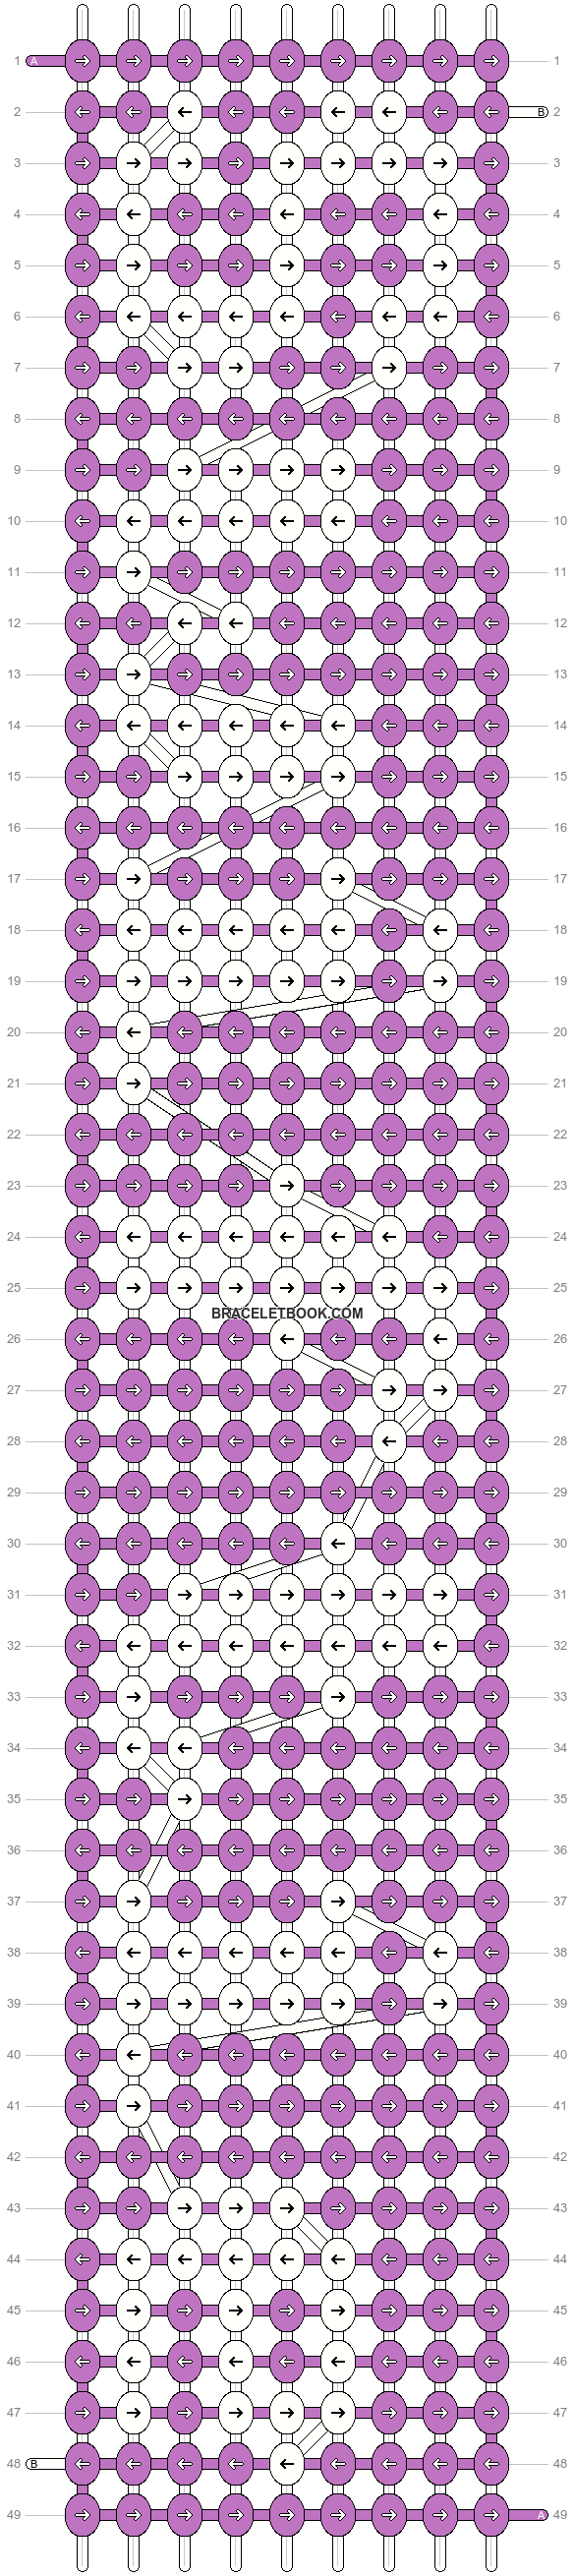 Alpha pattern #5817 variation #50758 pattern